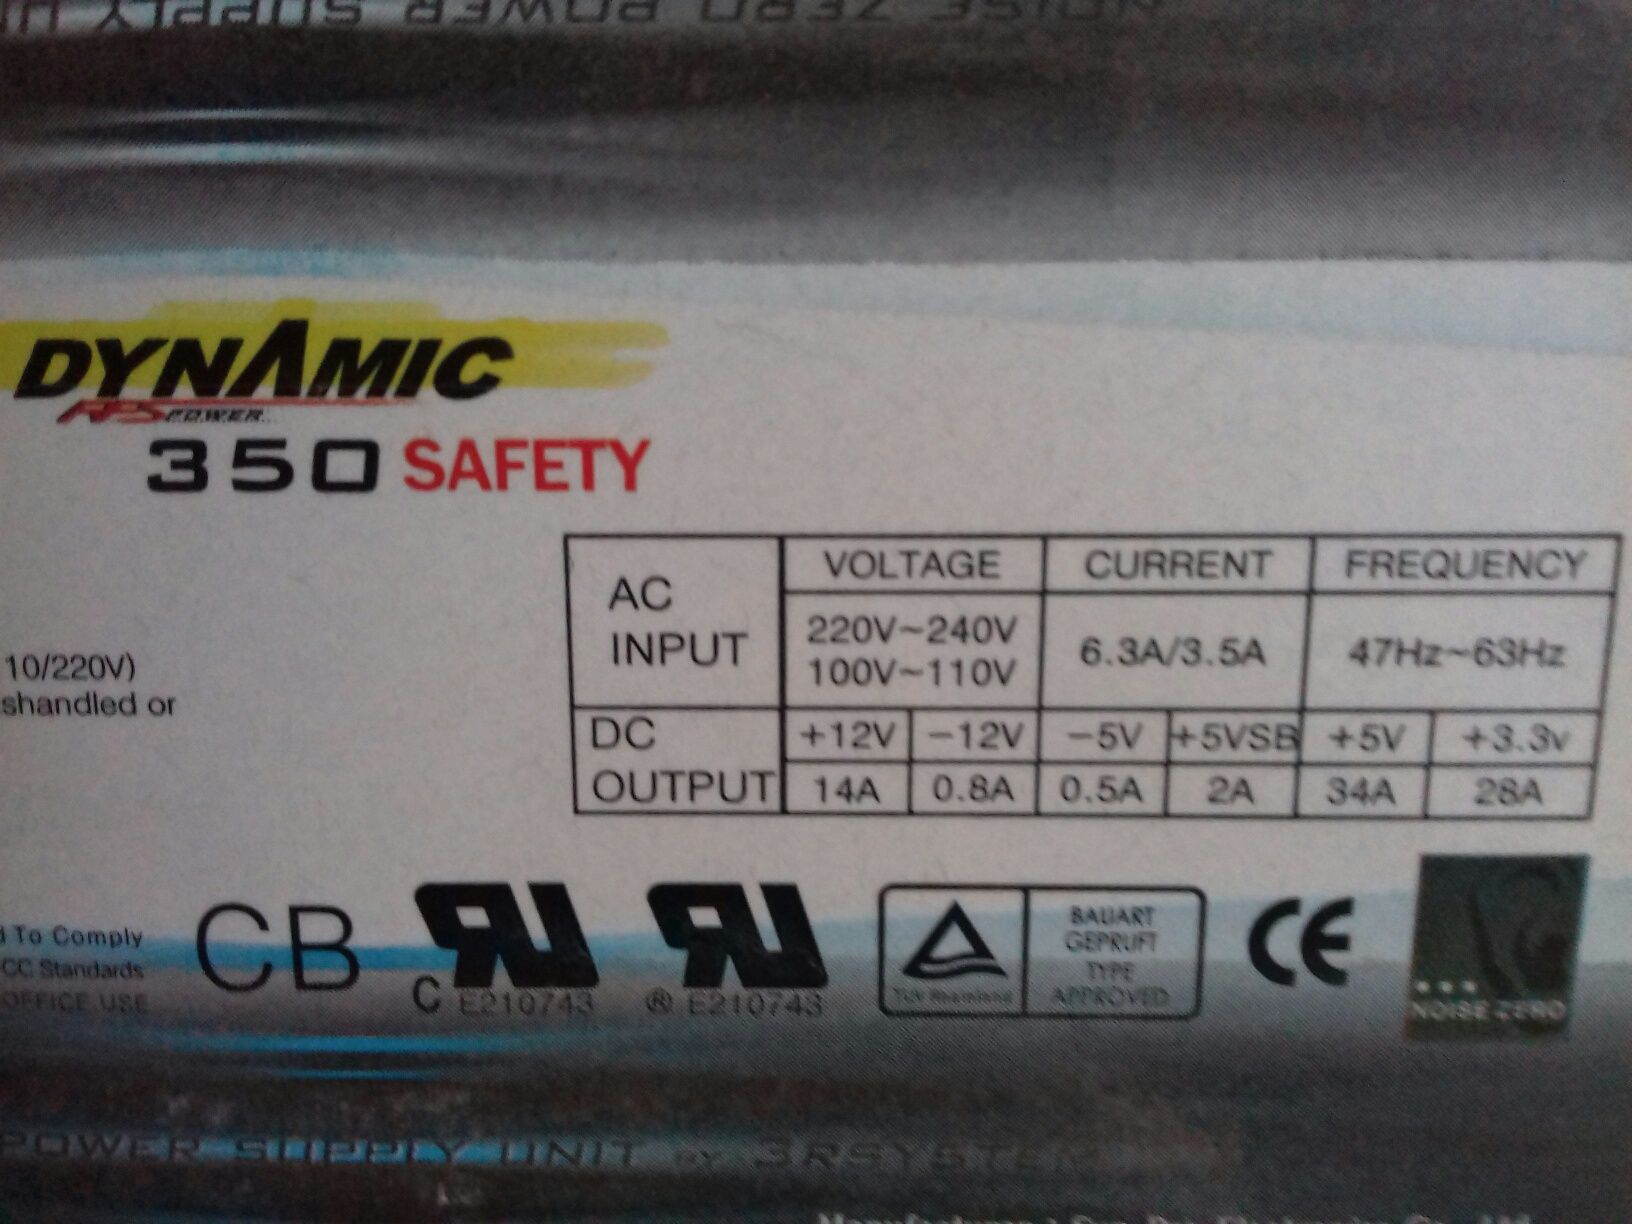 Блок питания dynAmic 350 safety. Новый